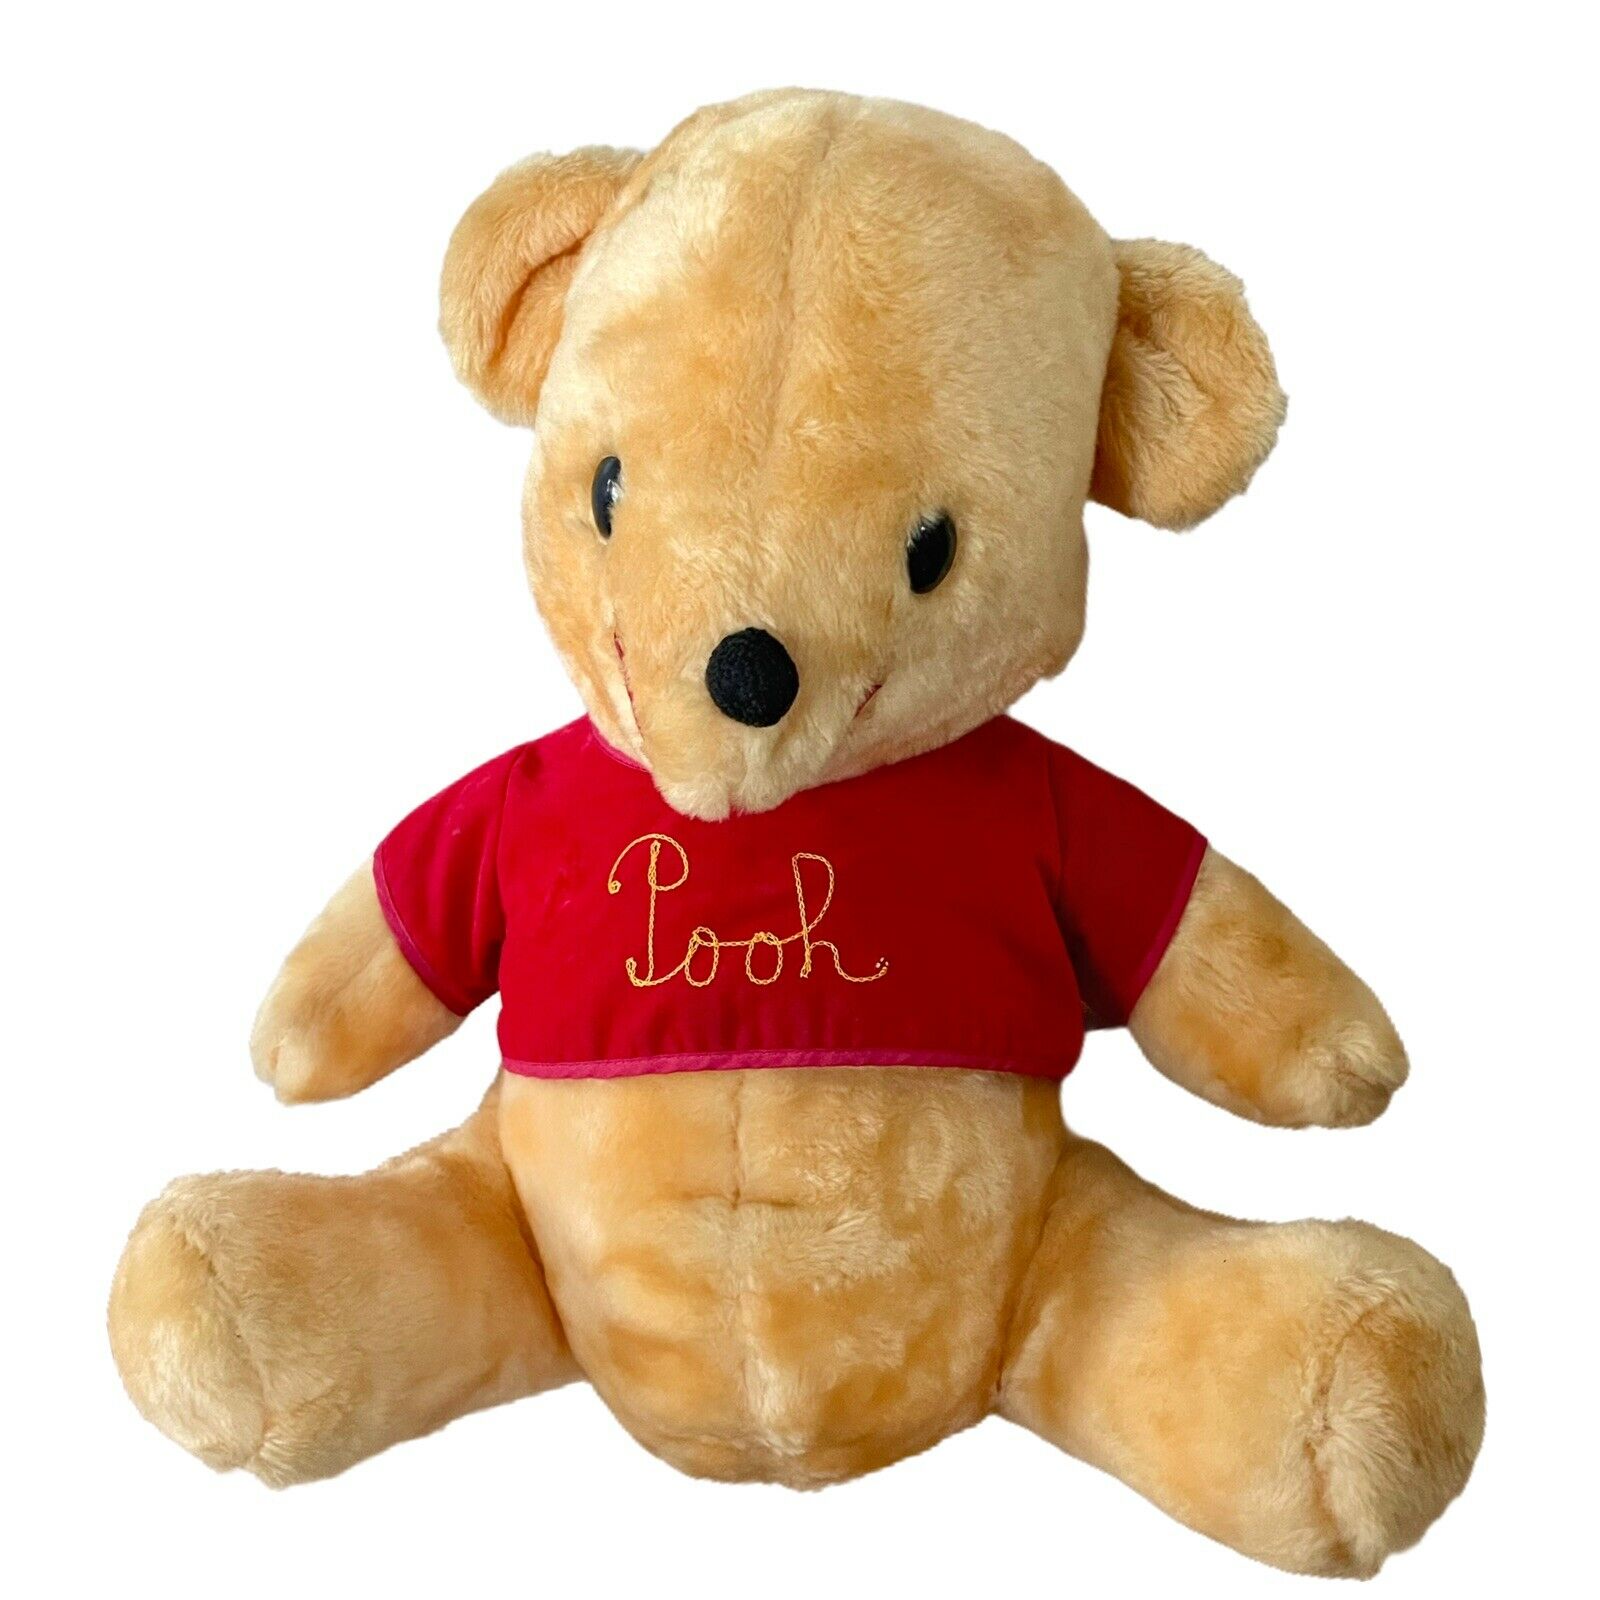 Vintage Old Winnie The Pooh Stuffed Plush Teddy Bear Walt Disney Distributing Co